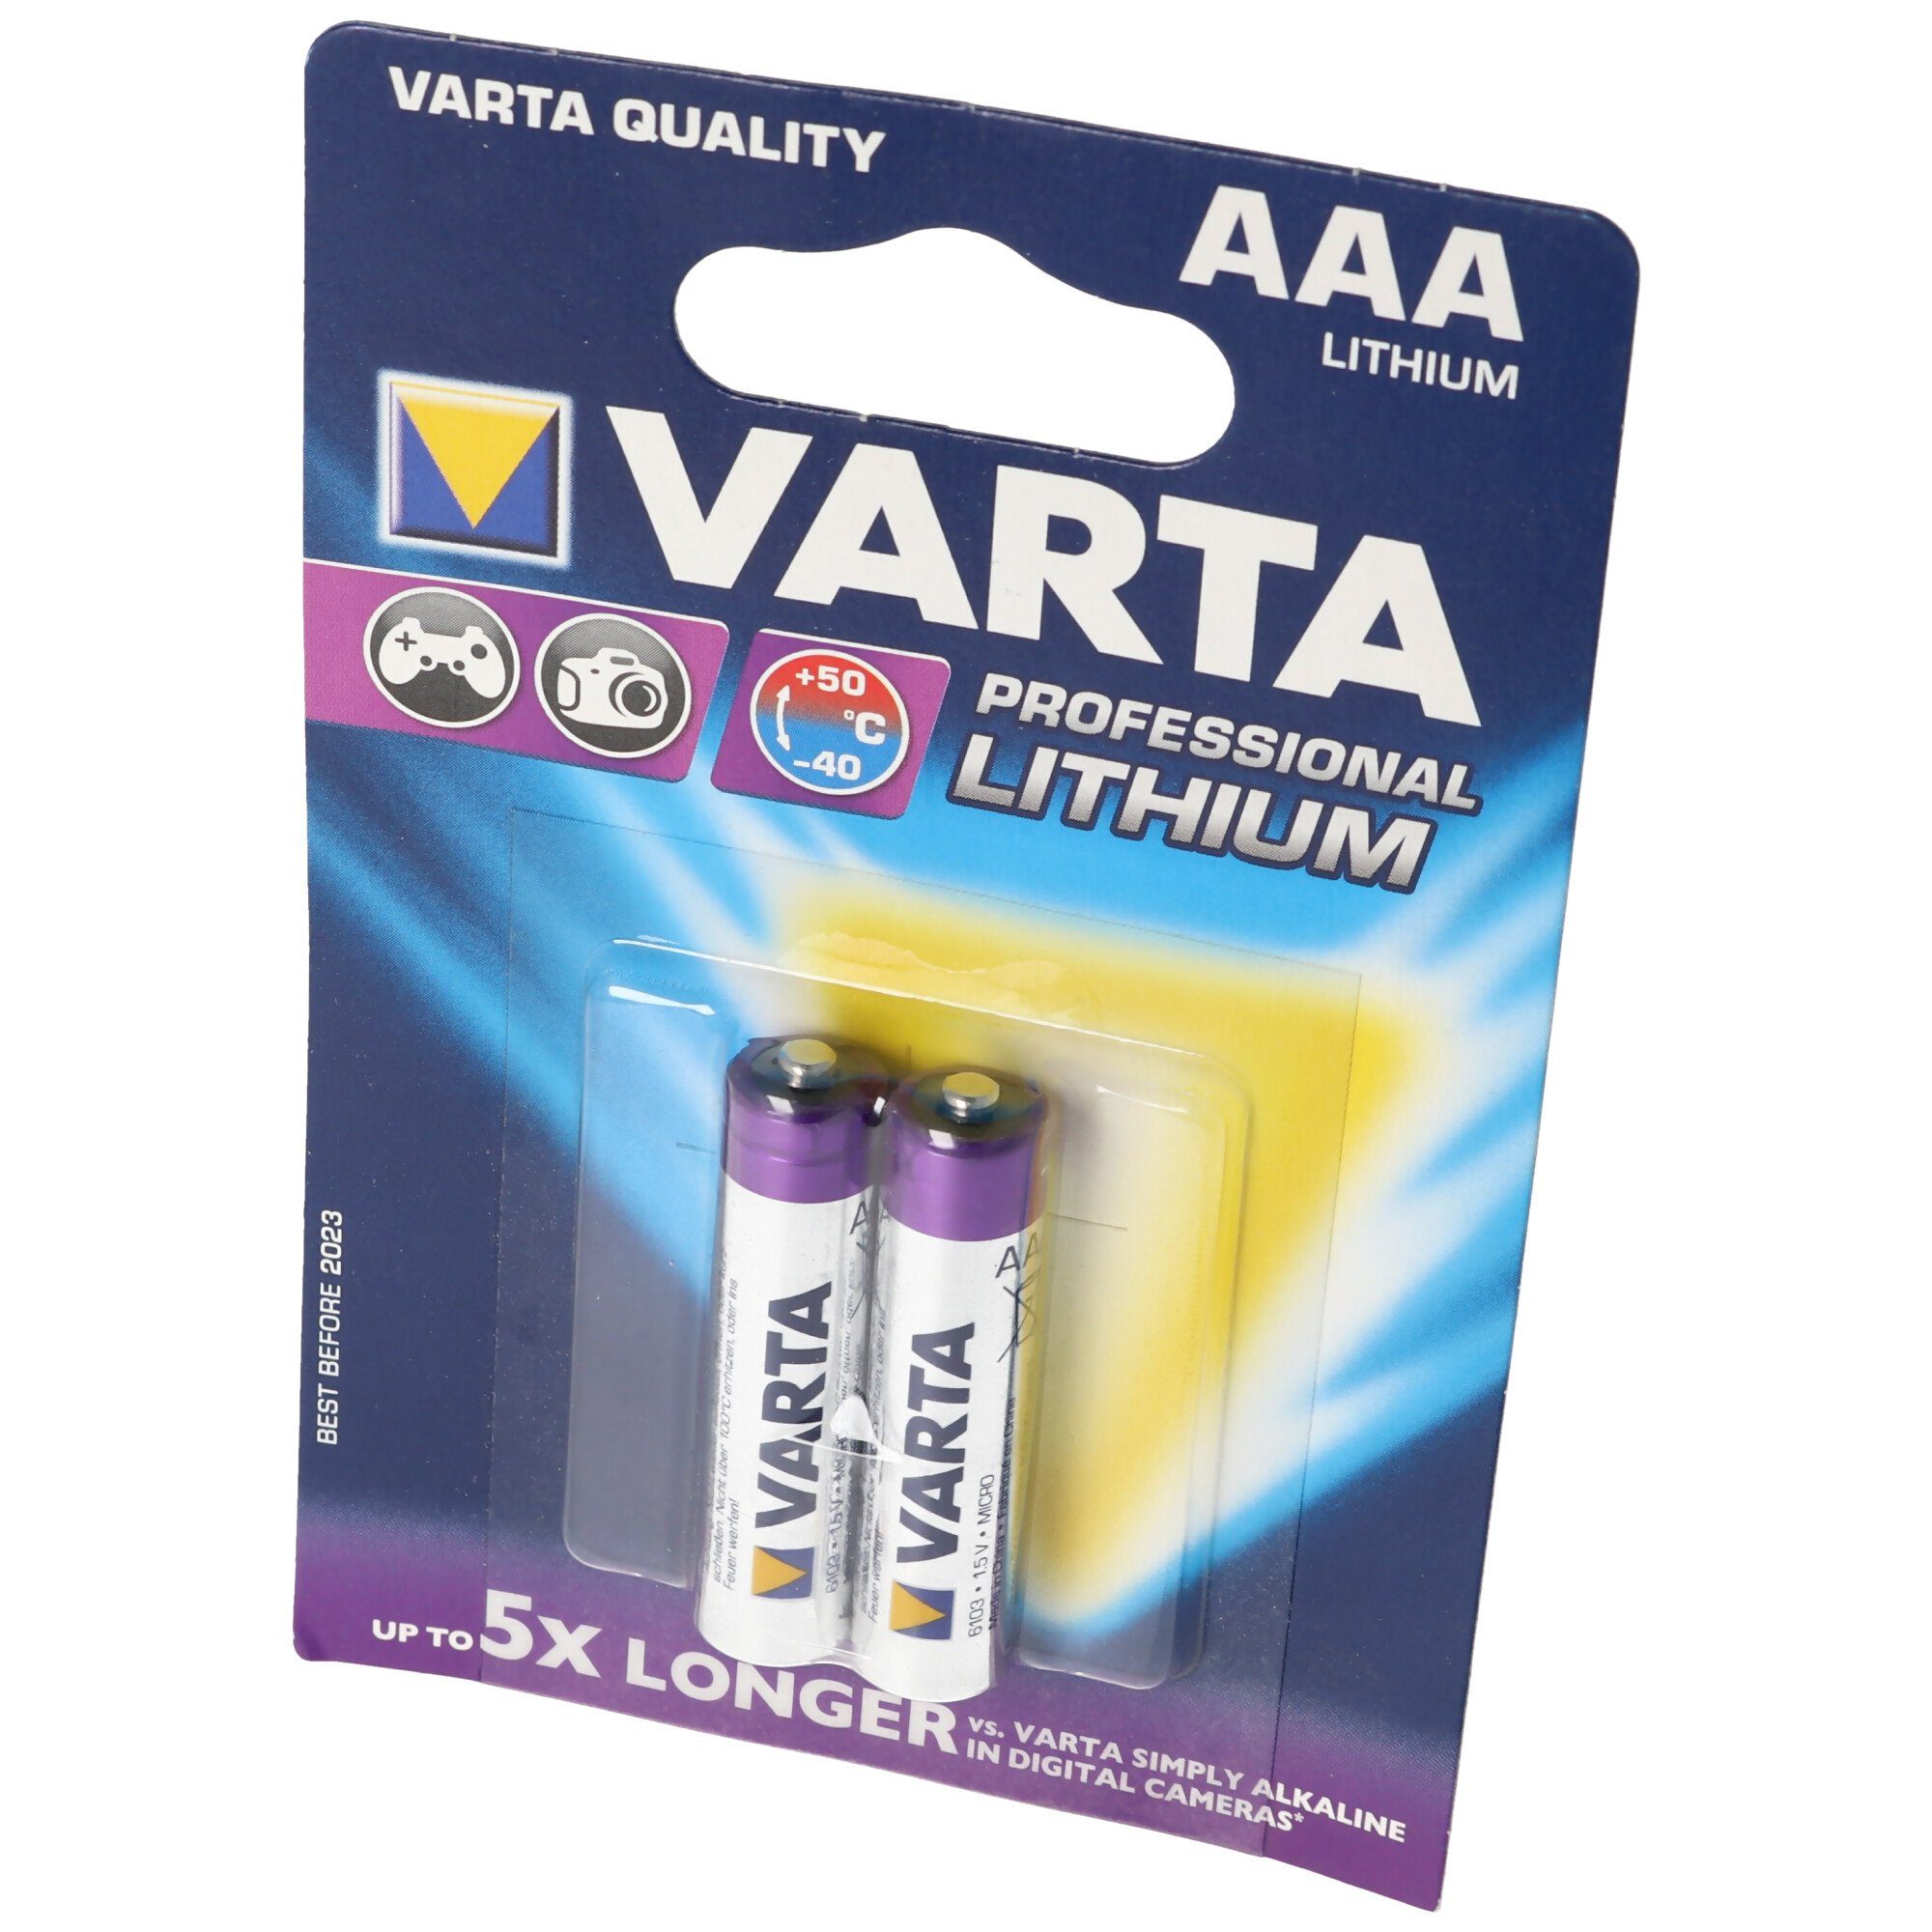 VARTA Varta Lithium Batterie Lithium, Ultra Micro, 6103, AAA, 1 FR03, Batterie Varta